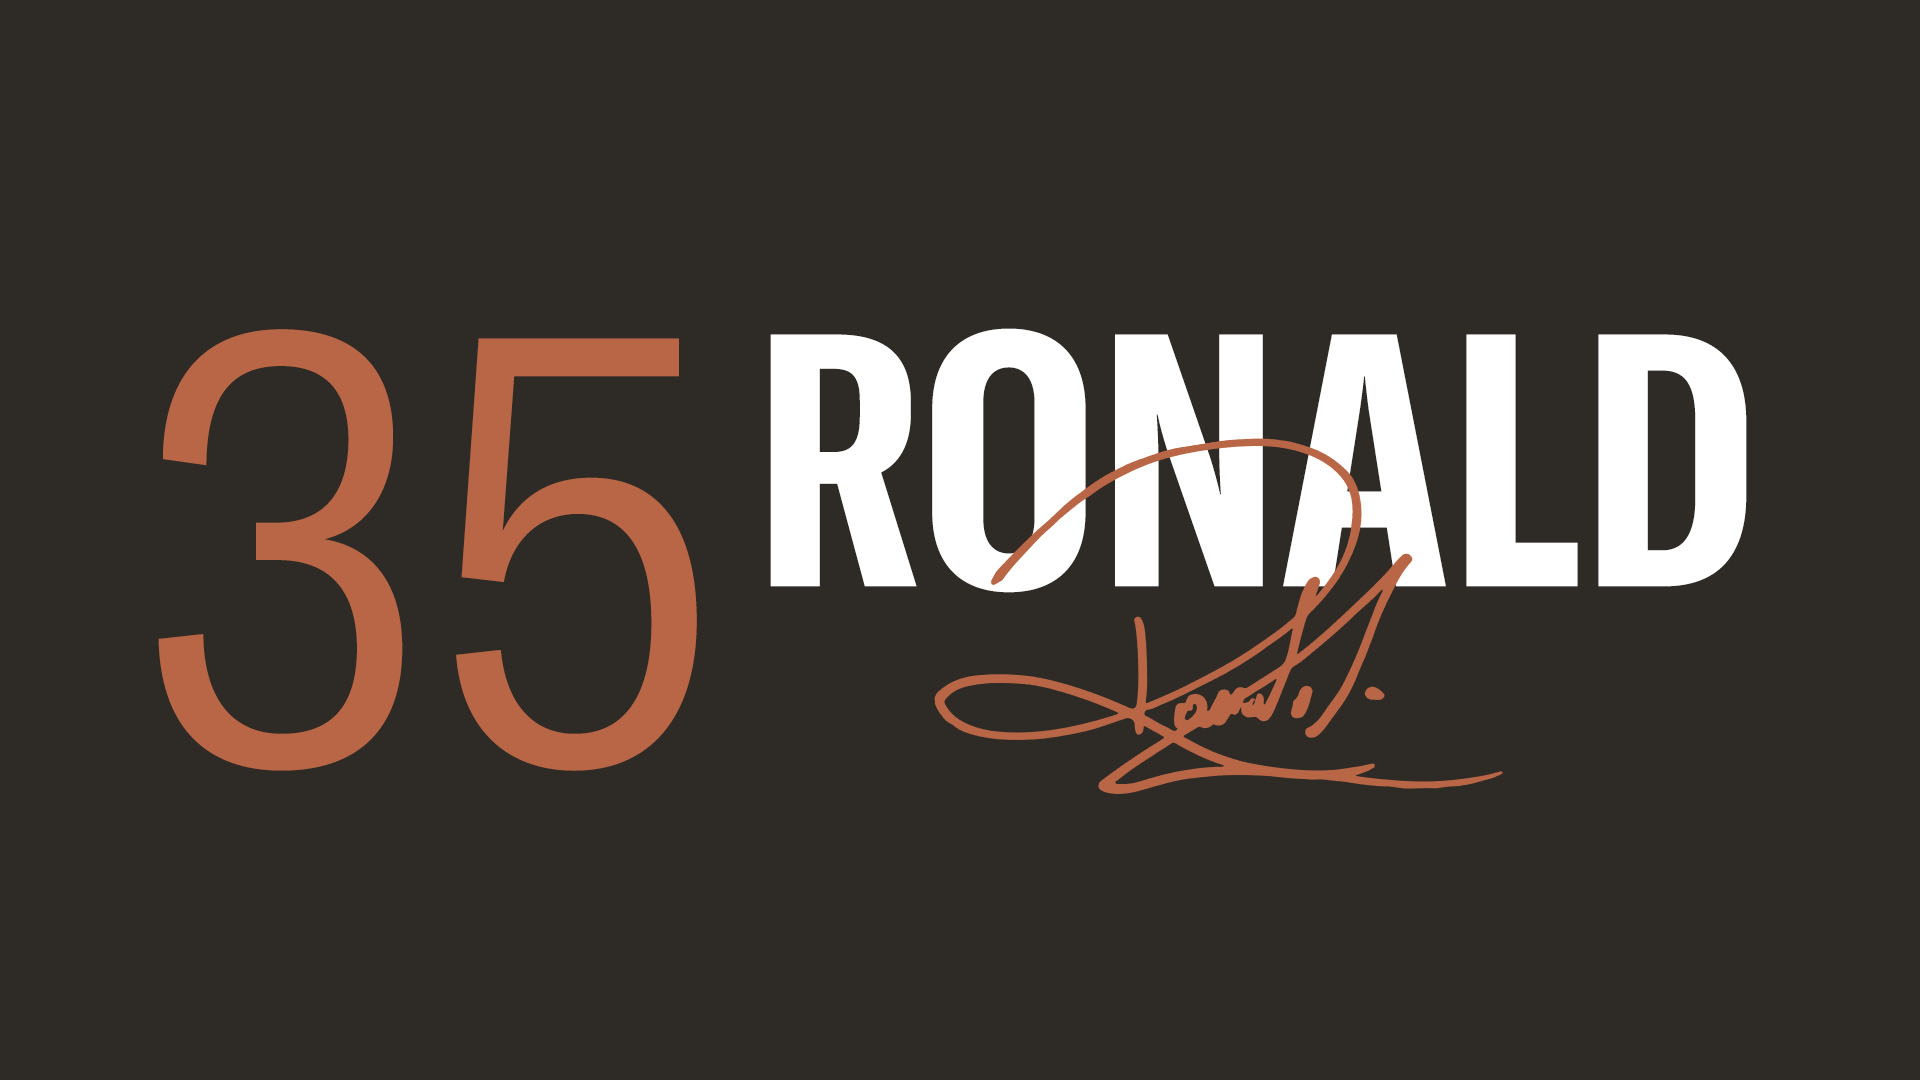 35 - Ronald